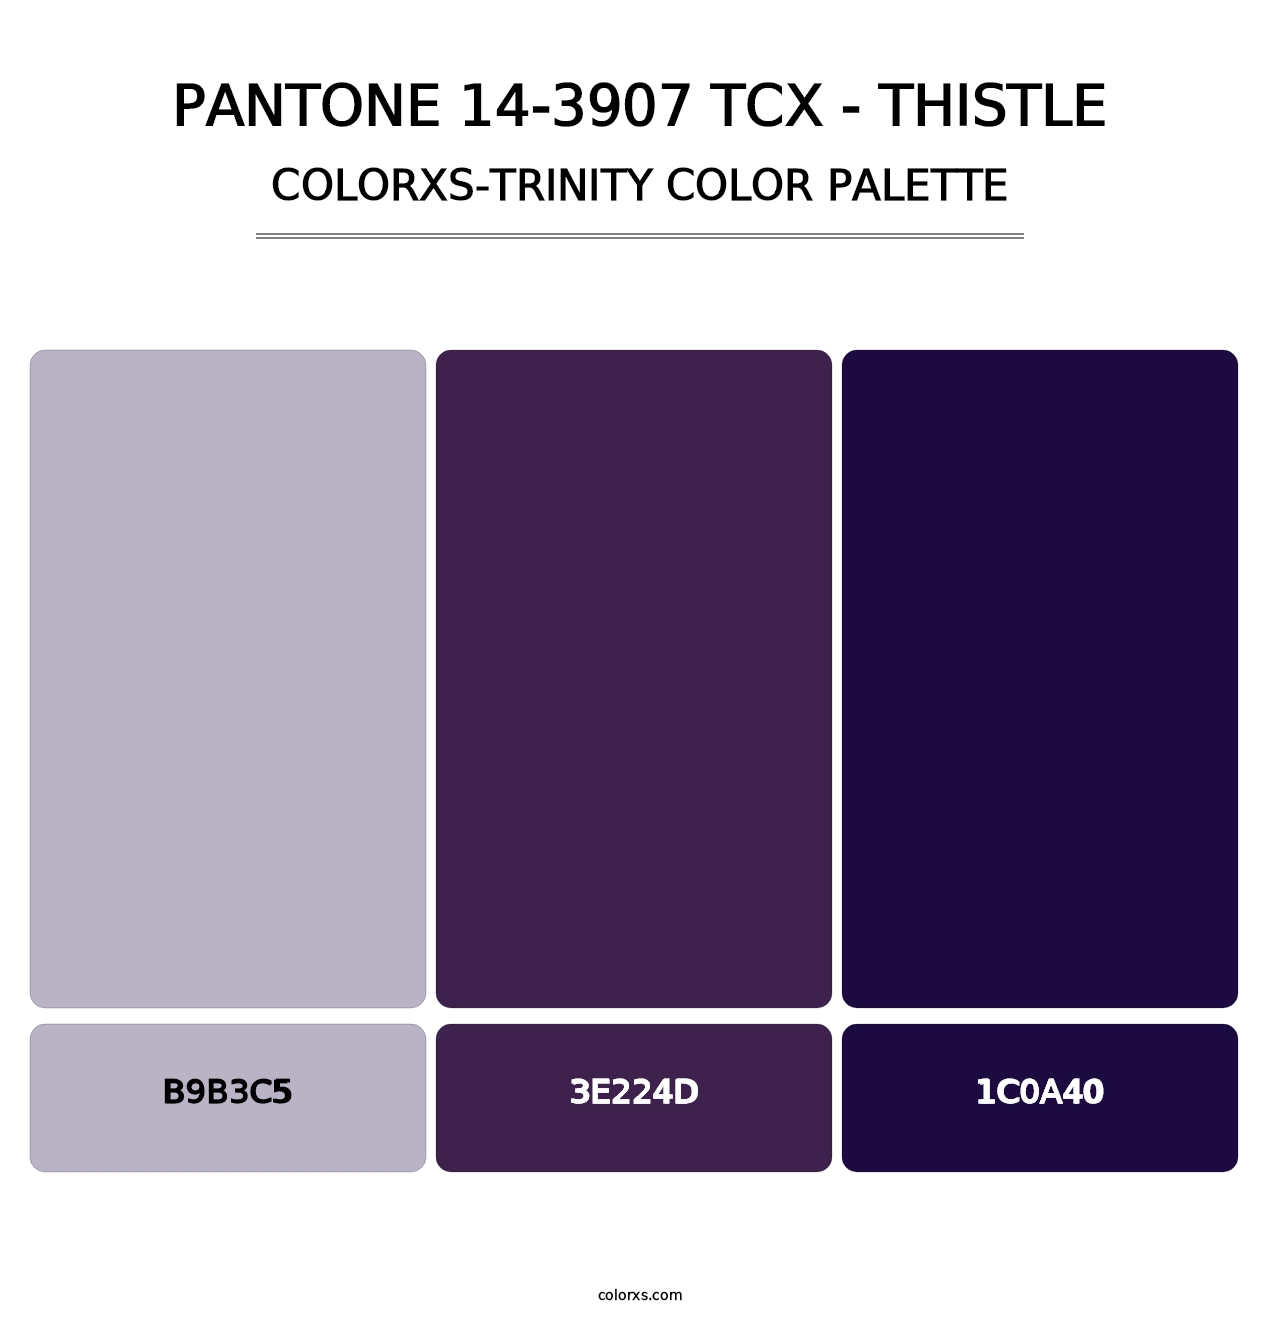 PANTONE 14-3907 TCX - Thistle - Colorxs Trinity Palette